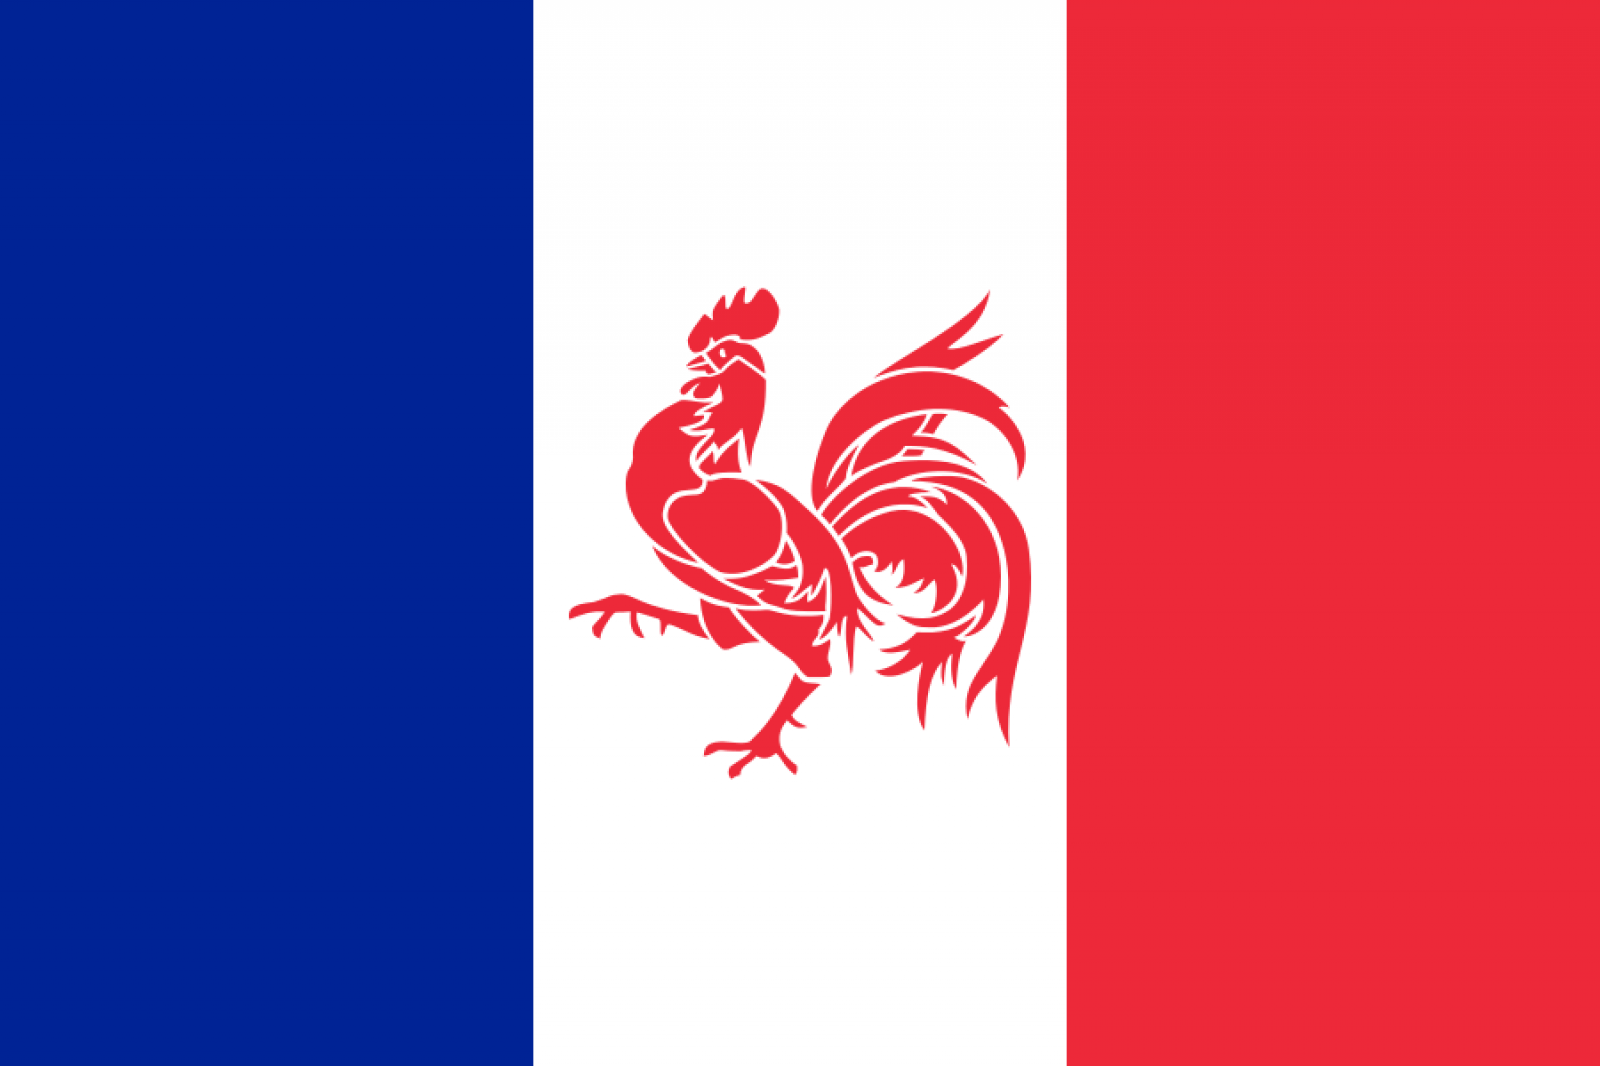 Галльский петух Франции. Петух символ Франции. Неофициальный символ Франции галльский петух. Гальский петушок герб Франции.